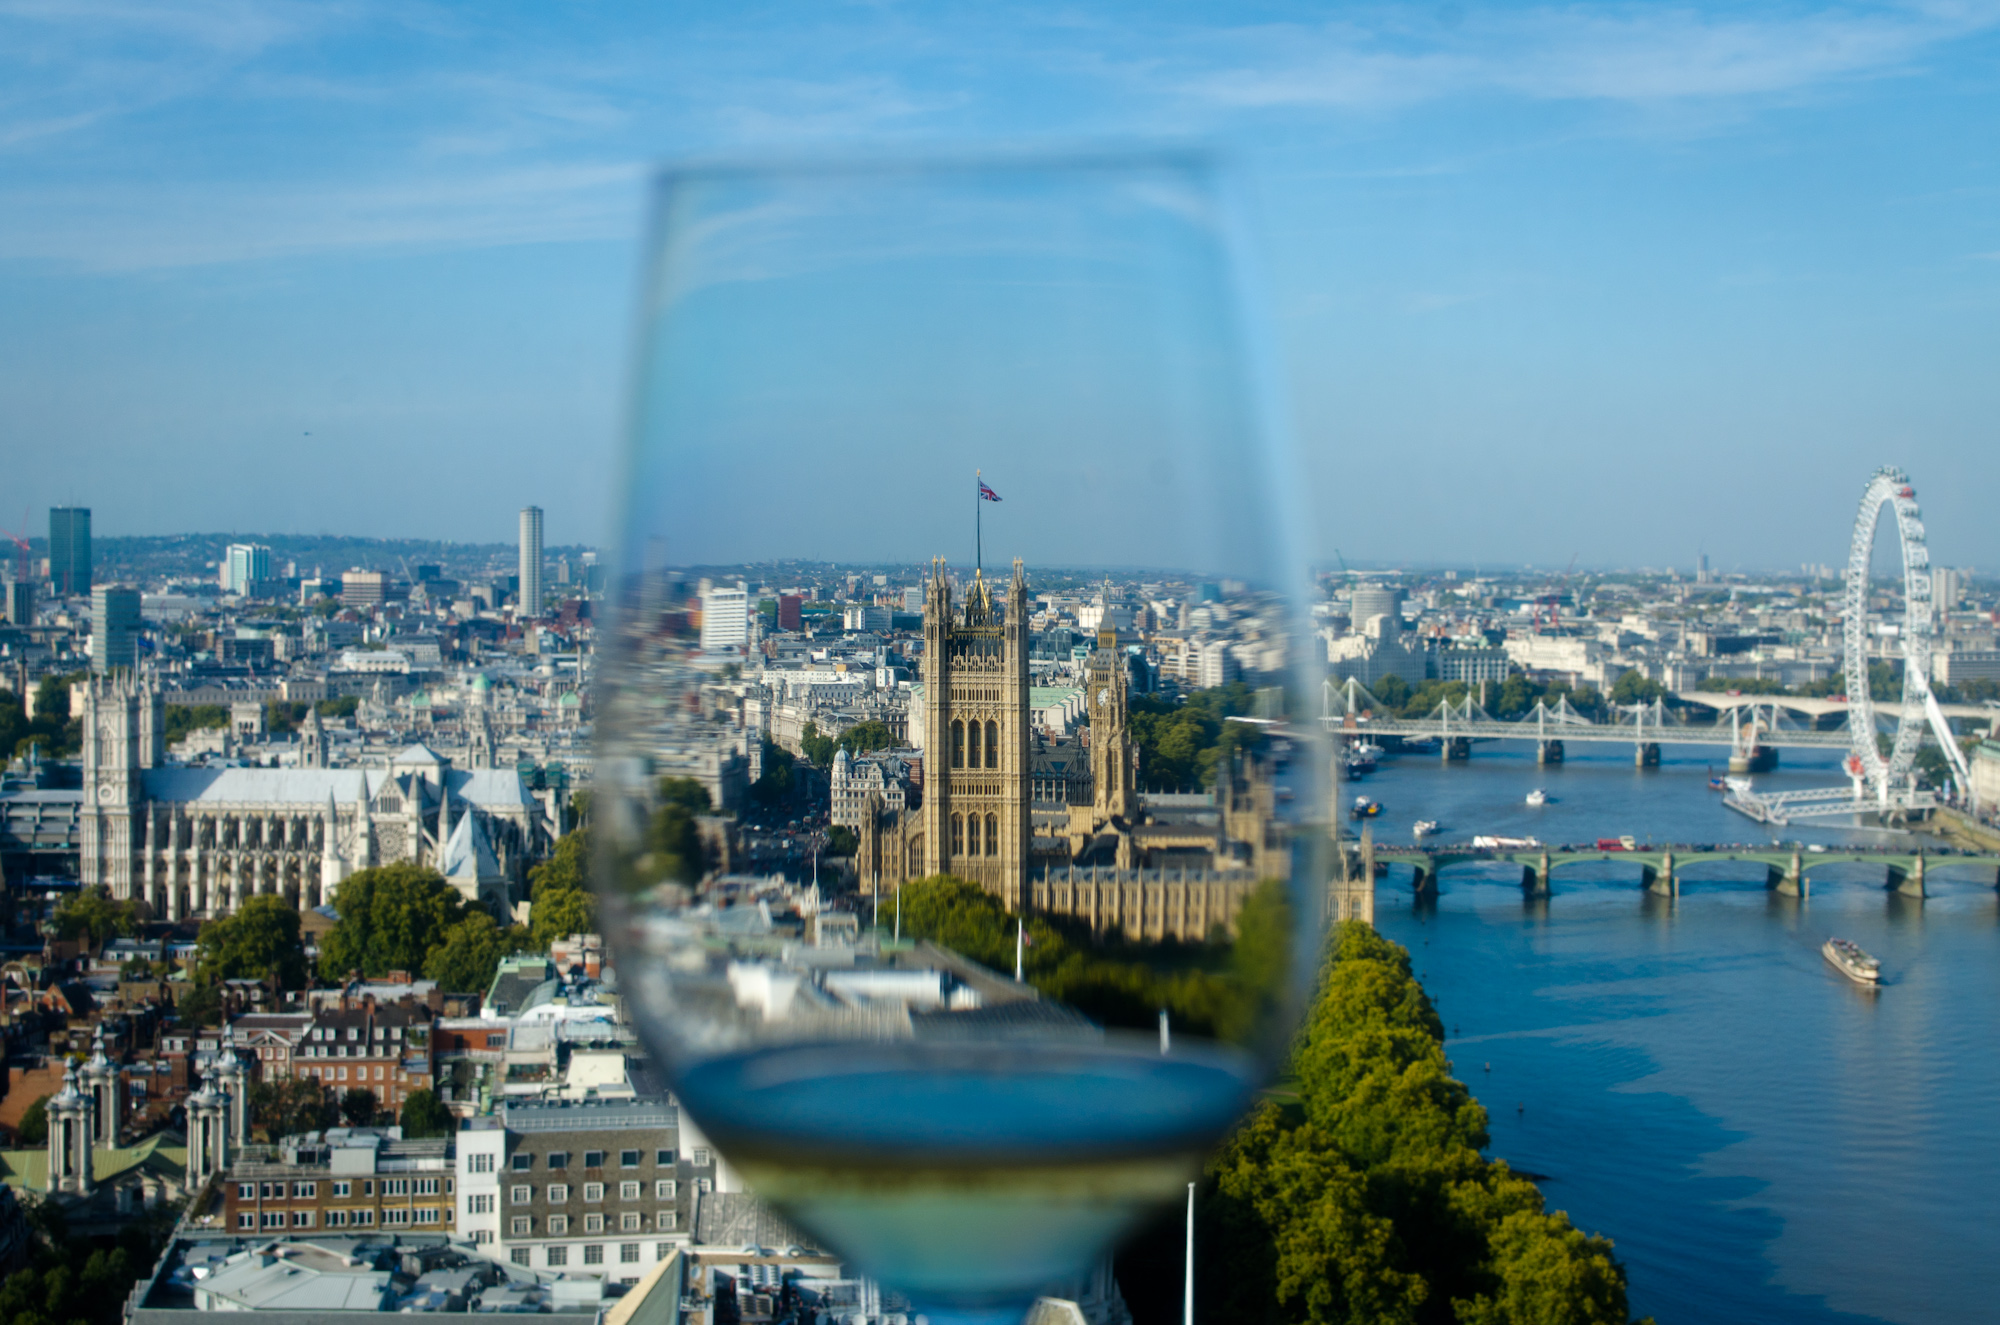 London through a wine glass